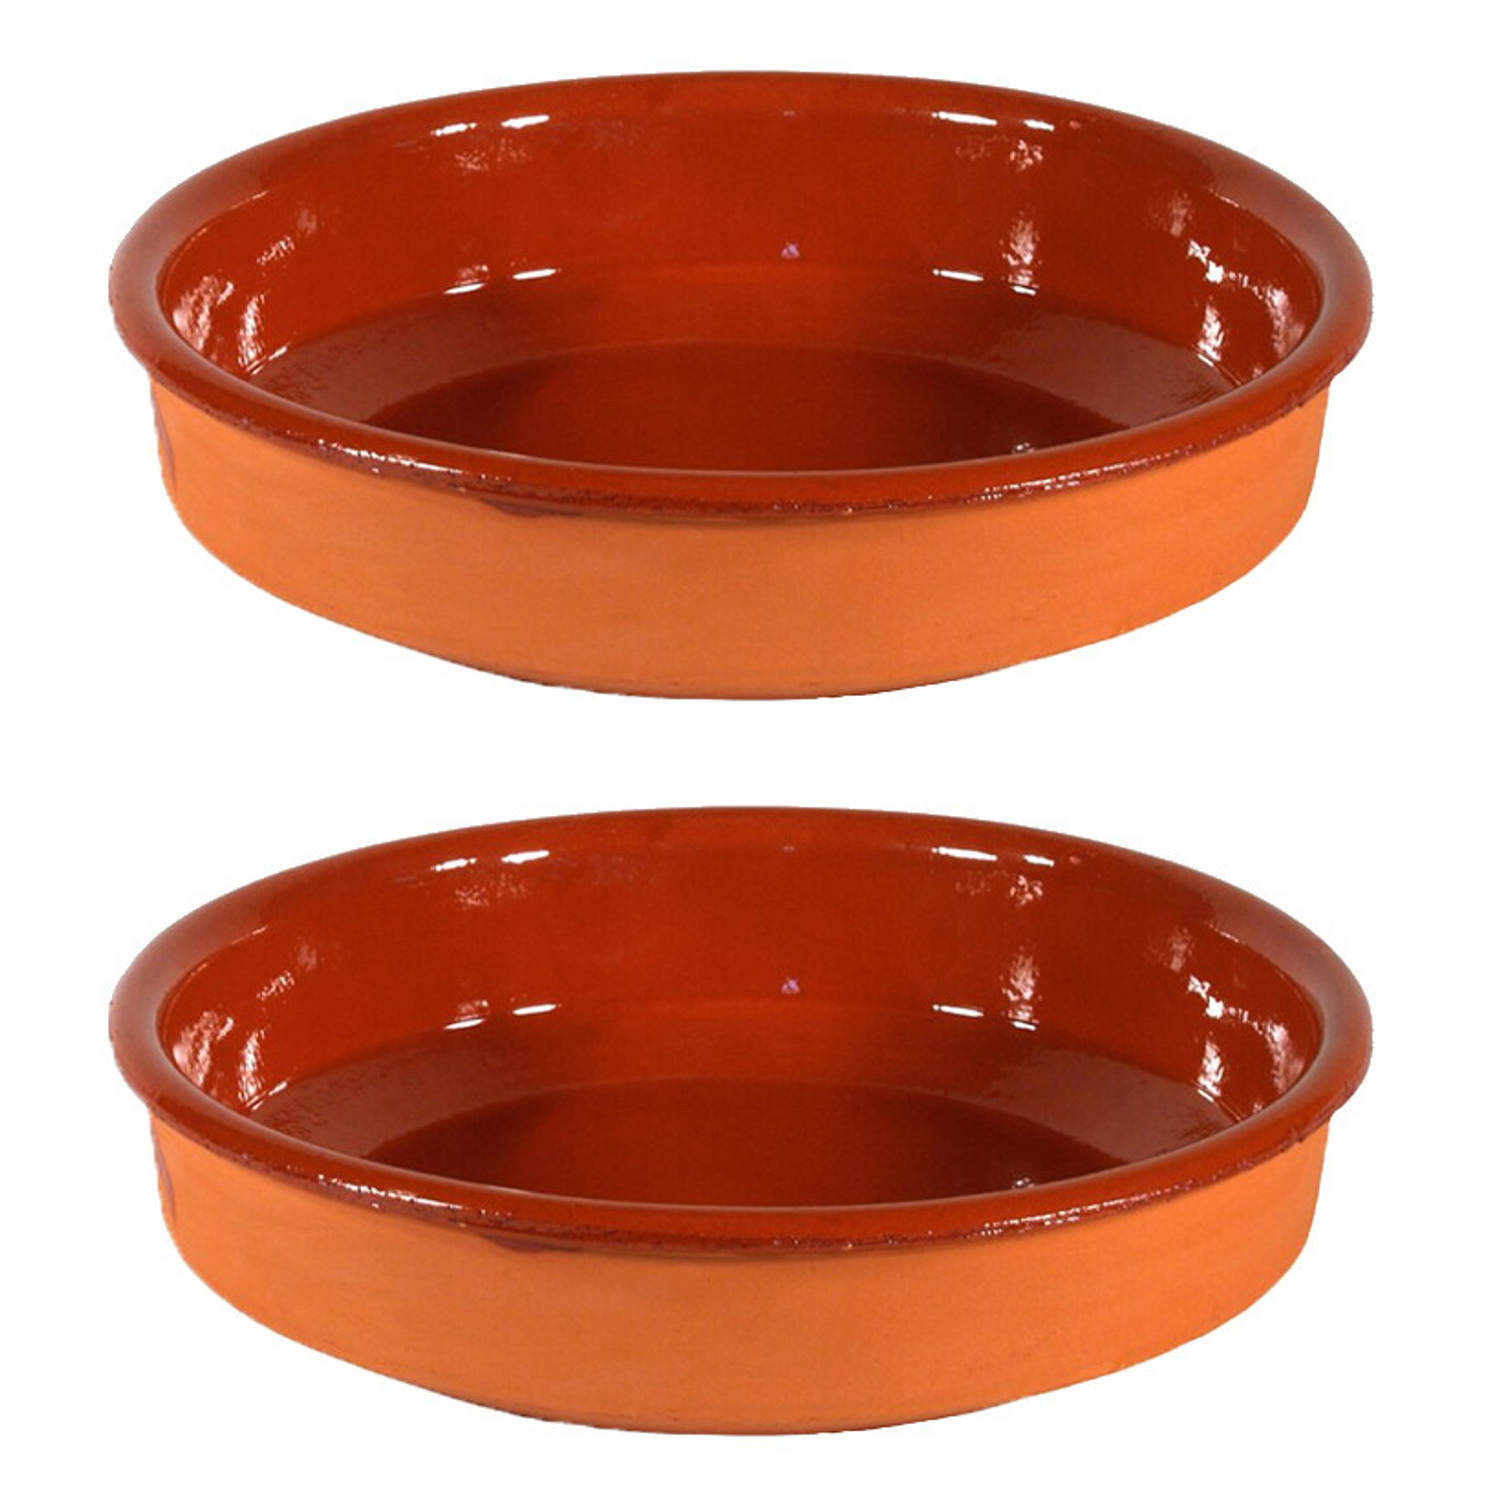 2x Terracotta tapas borden/schalen 26 cm - Snack en tapasschalen